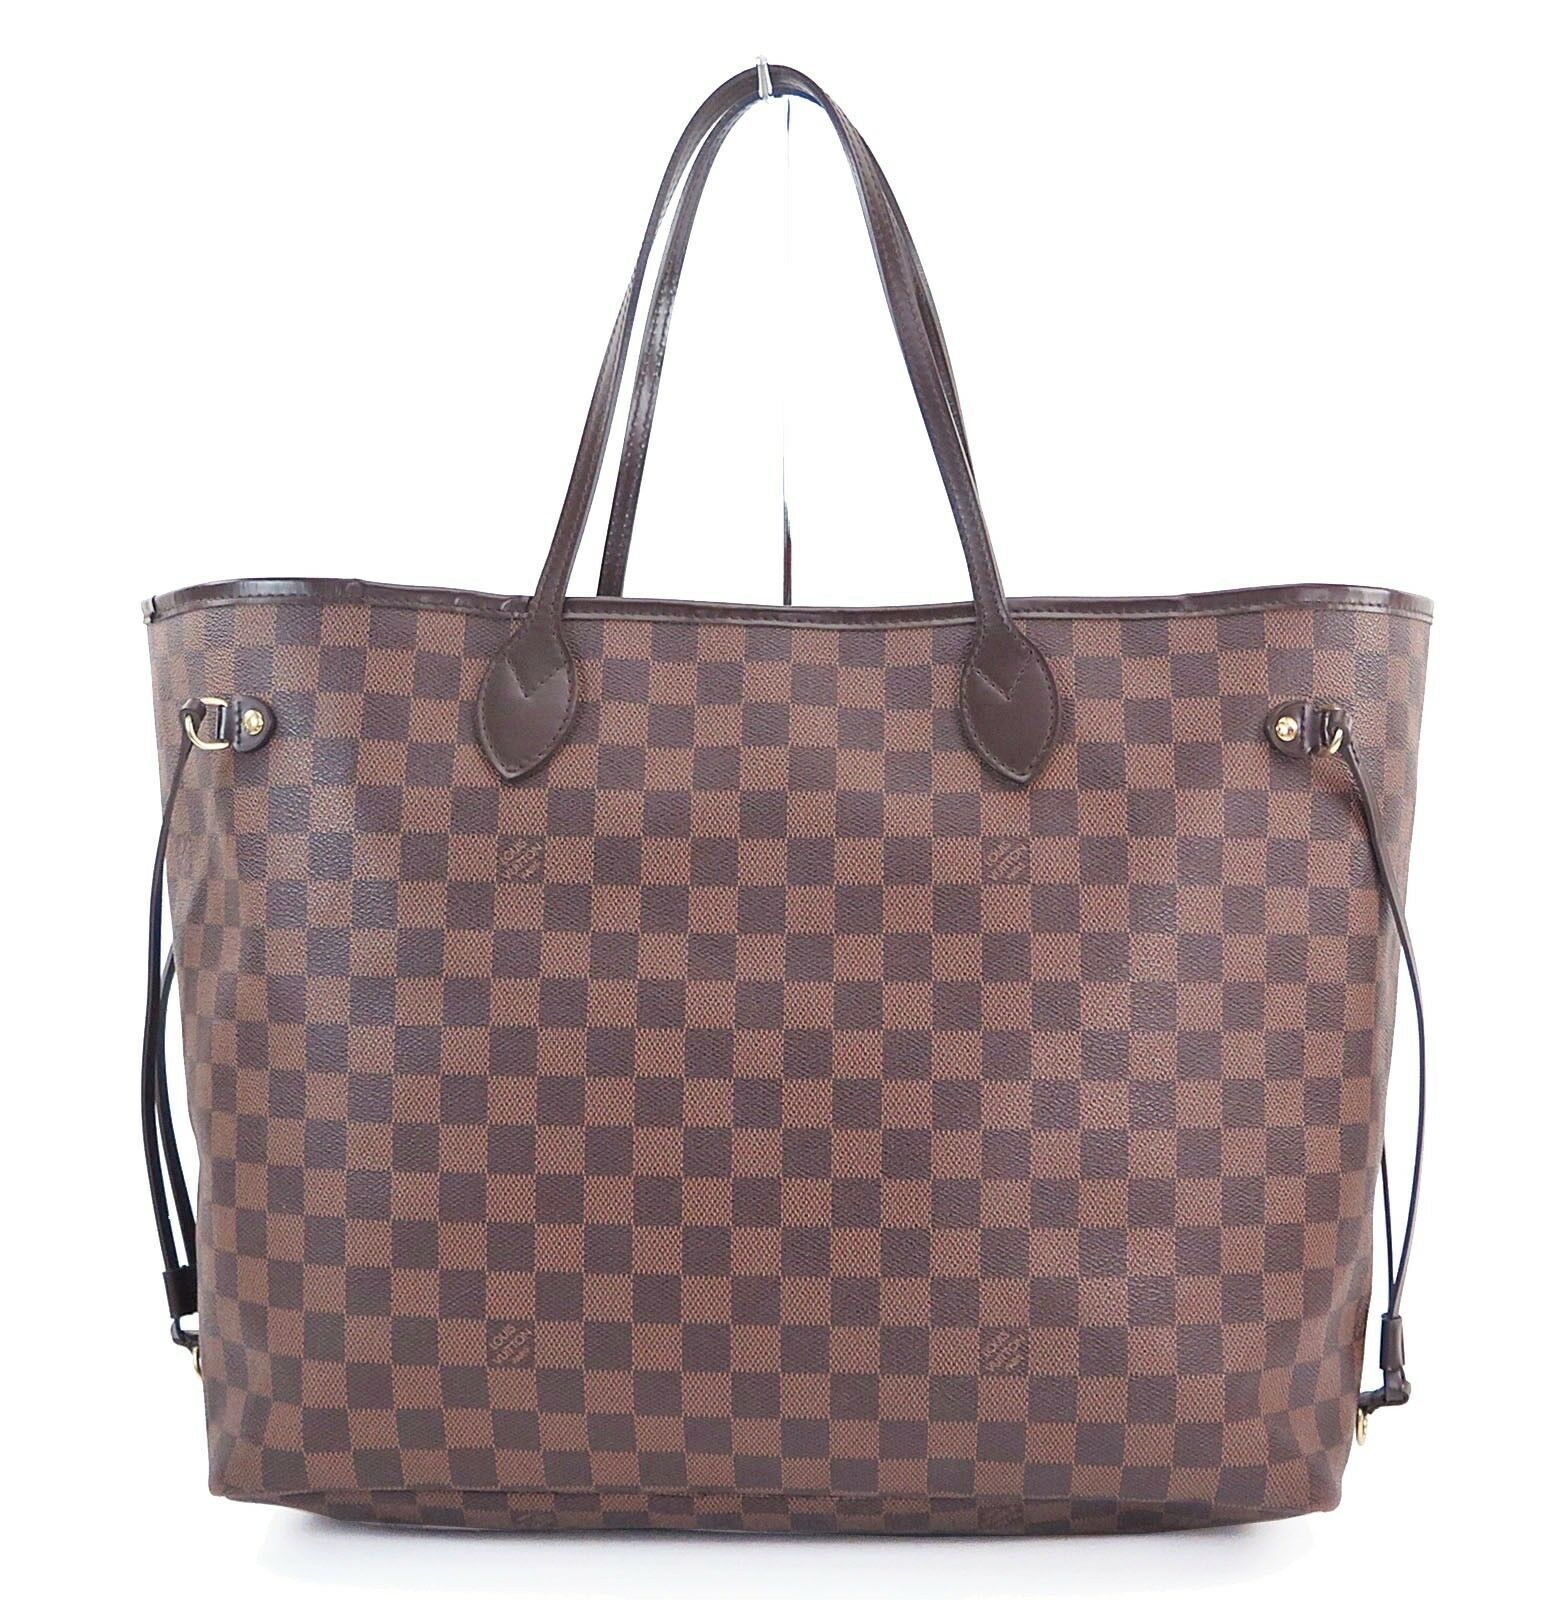 Authentic LOUIS VUITTON Neverfull GM Damier Ebene Tote Bag Purse #30766 - Women&#39;s Handbags & Bags